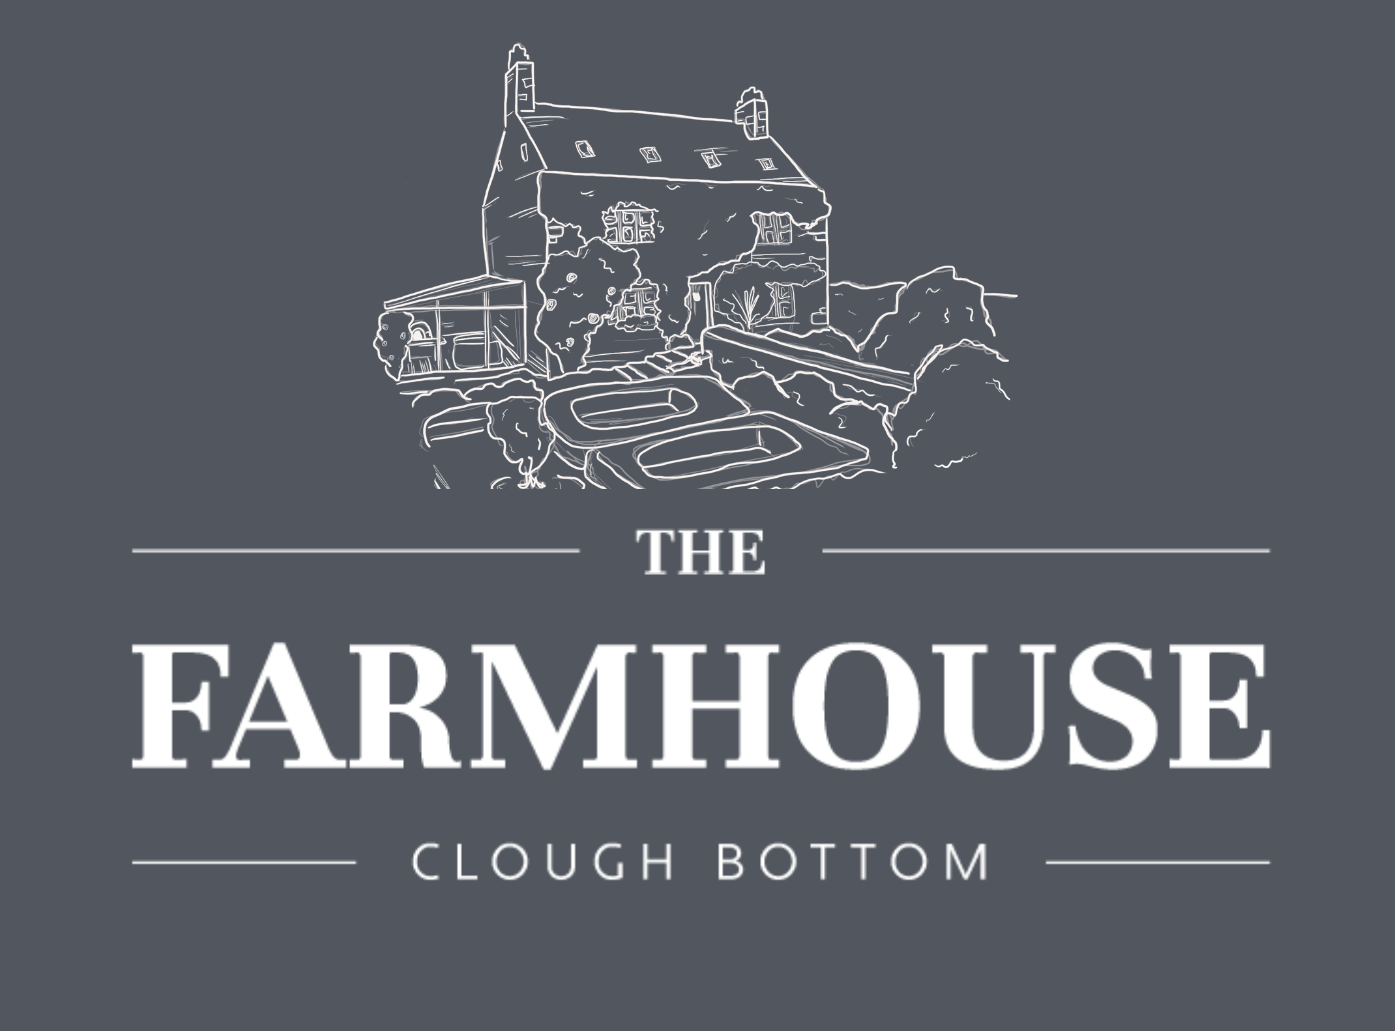 The Farmhouse at Clough Bottom